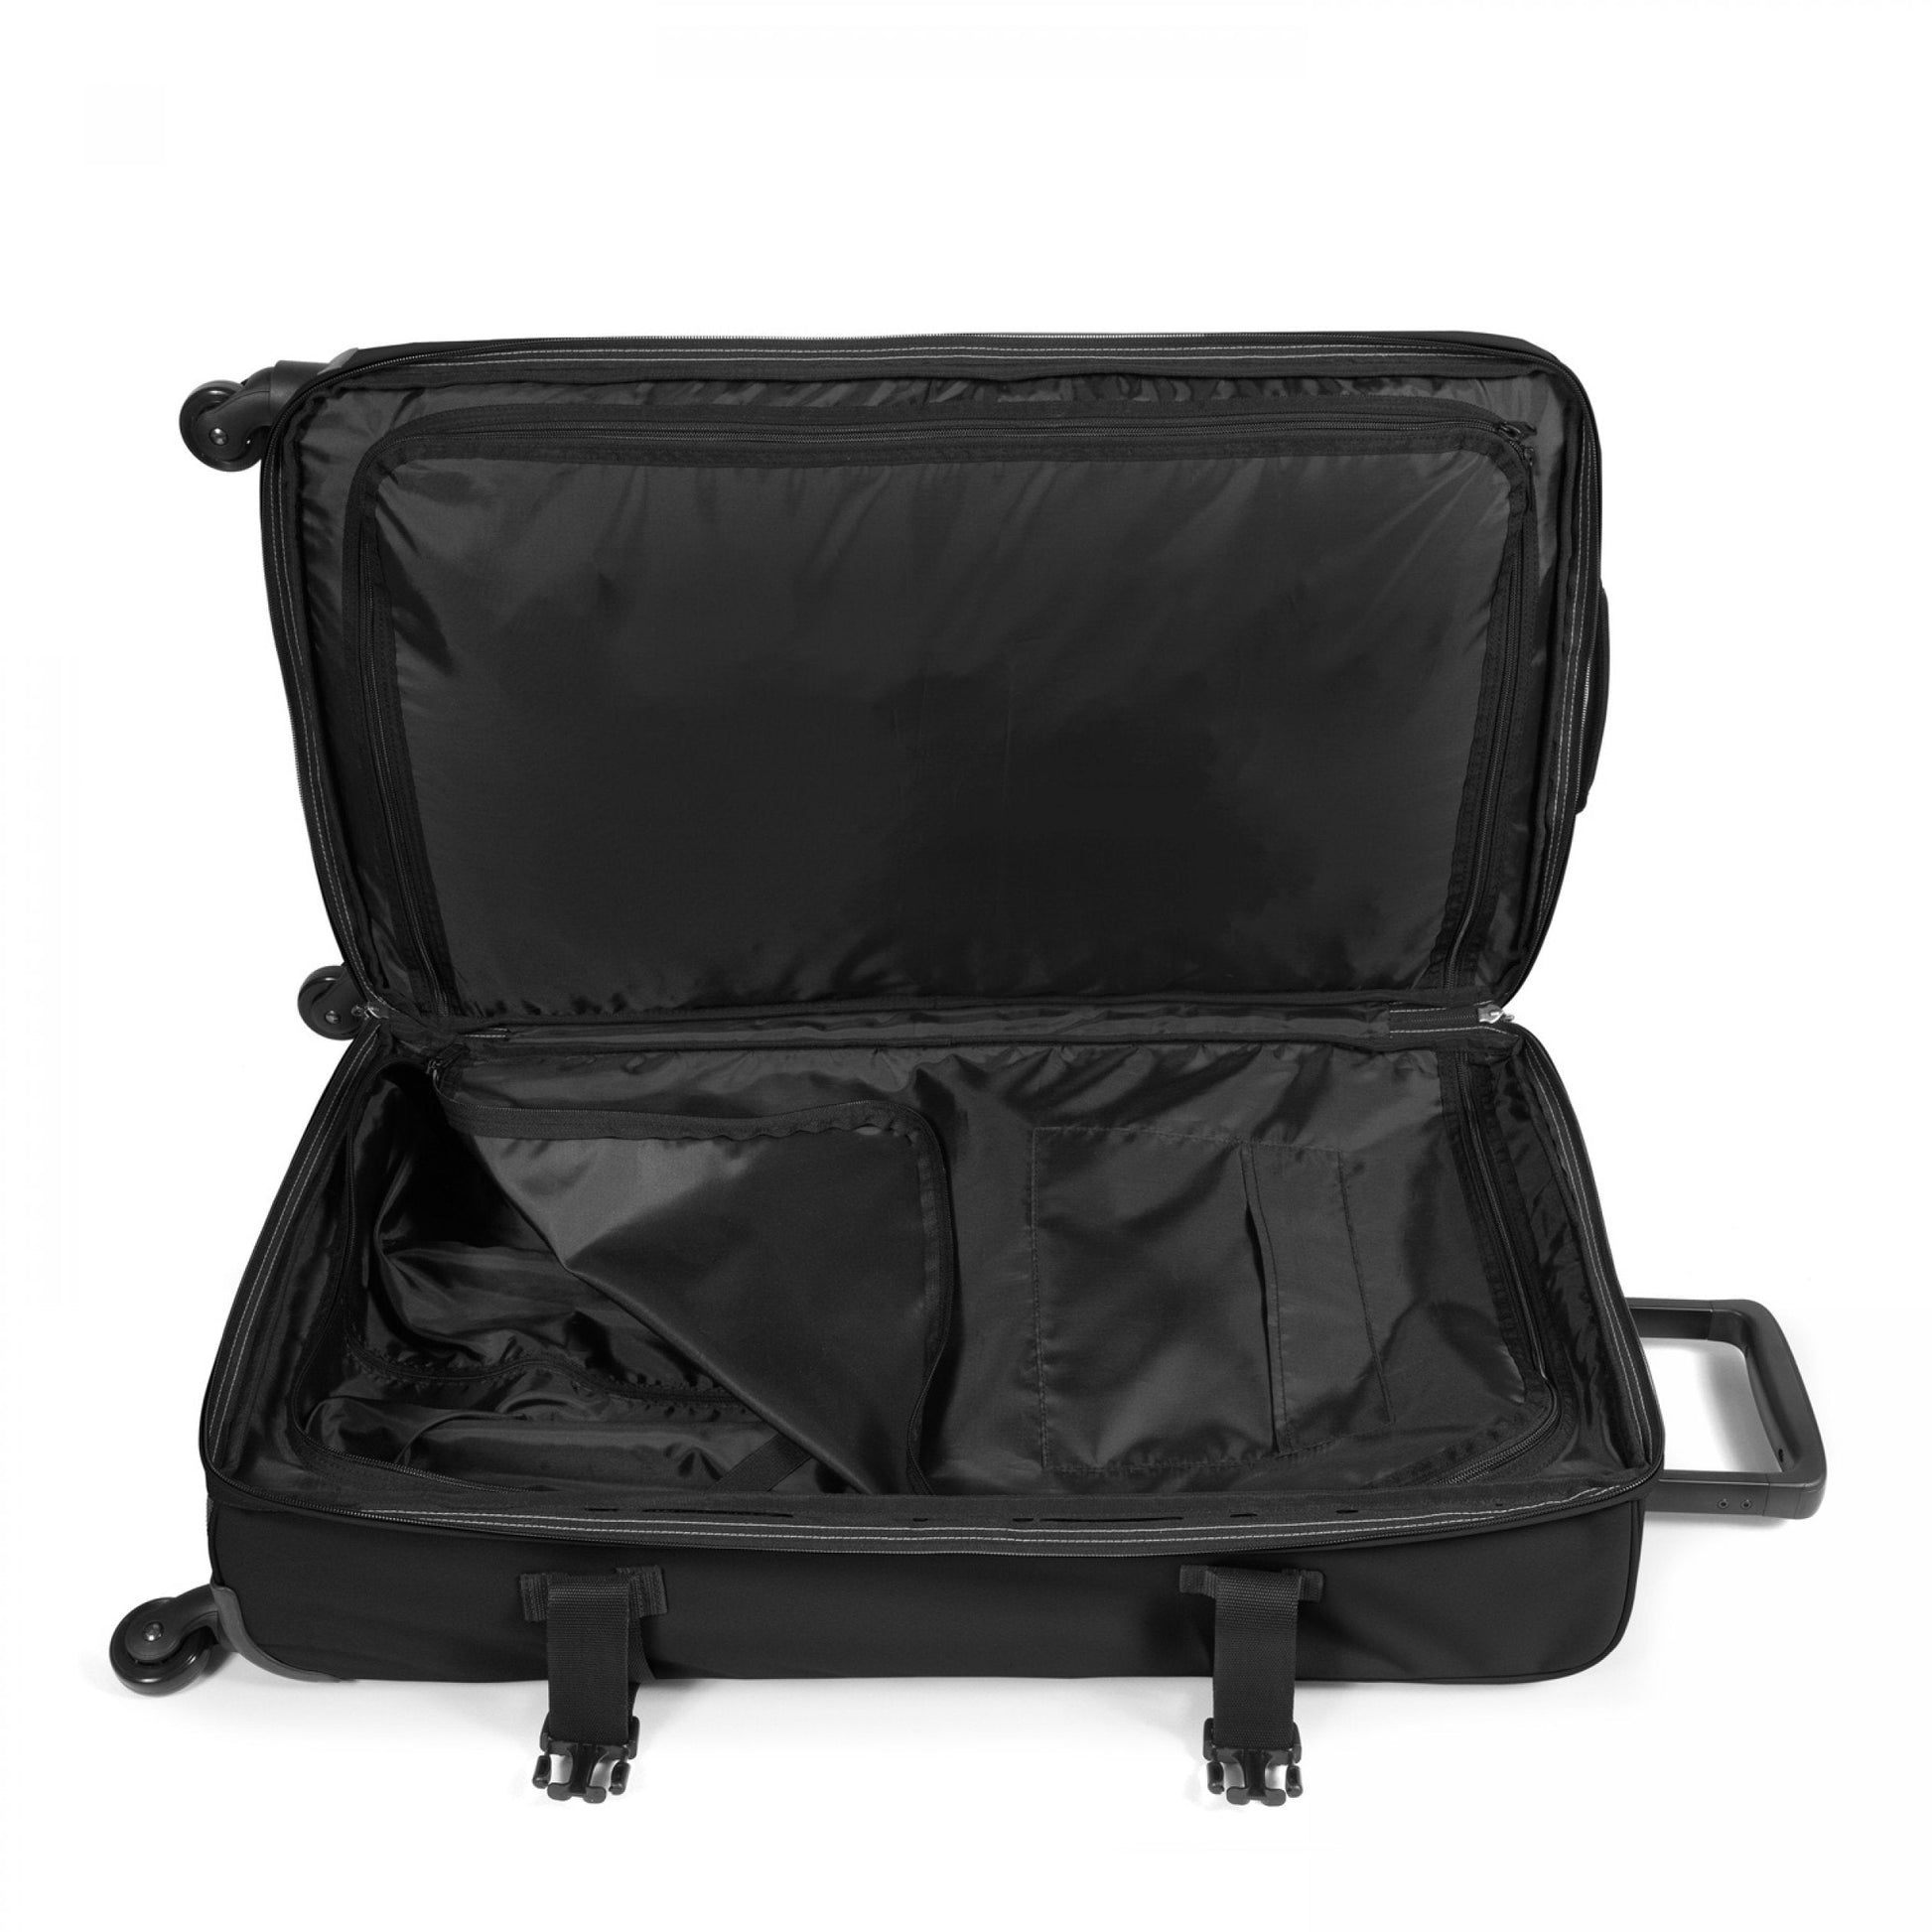 Eastpak Trans4 Large Luggage - Black